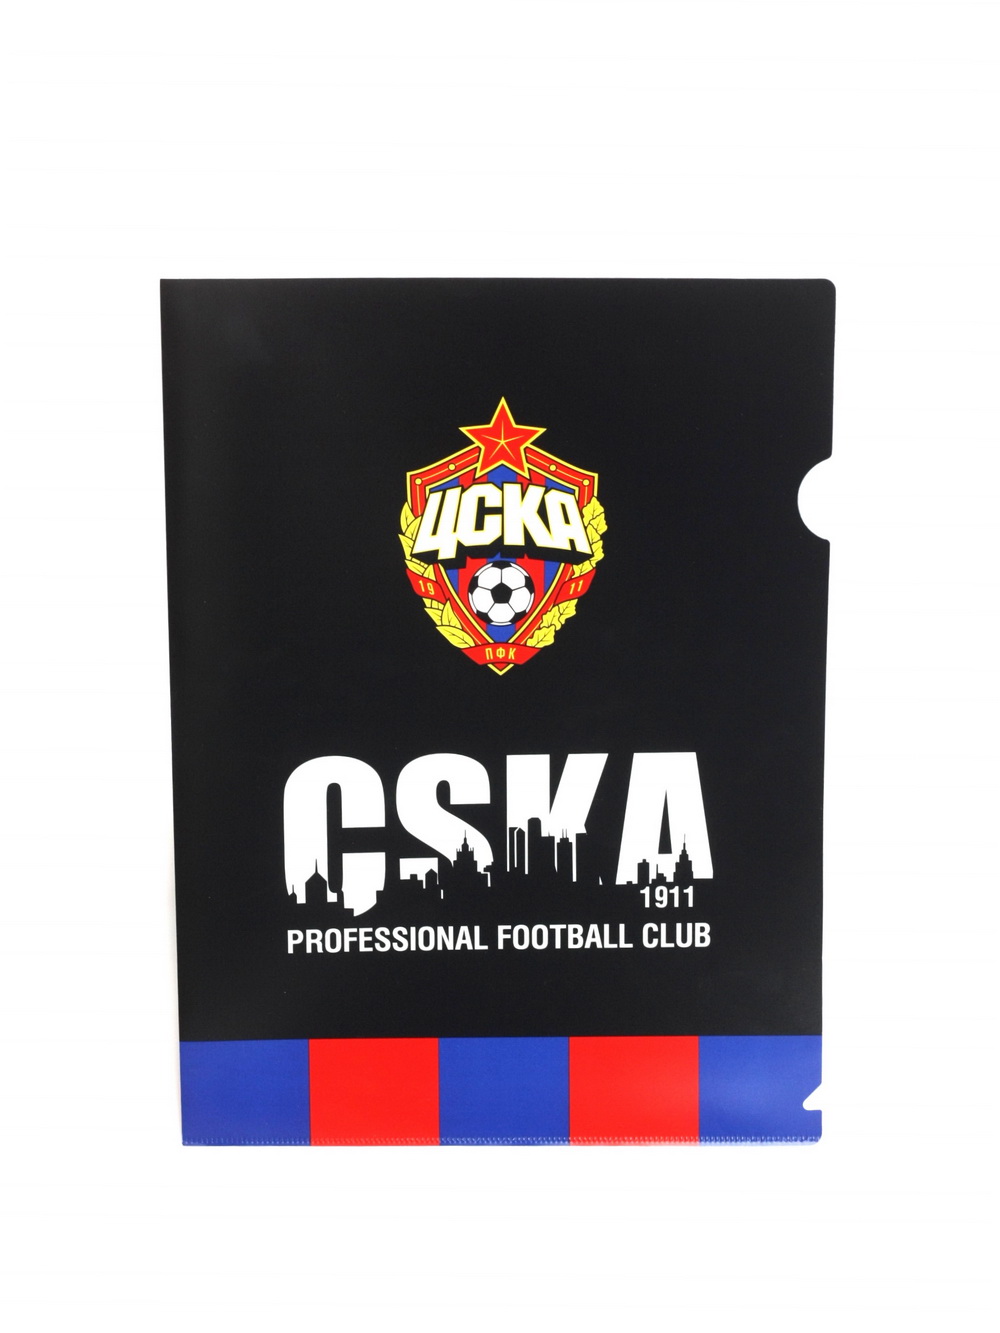 - ( 4) PFC CSKA